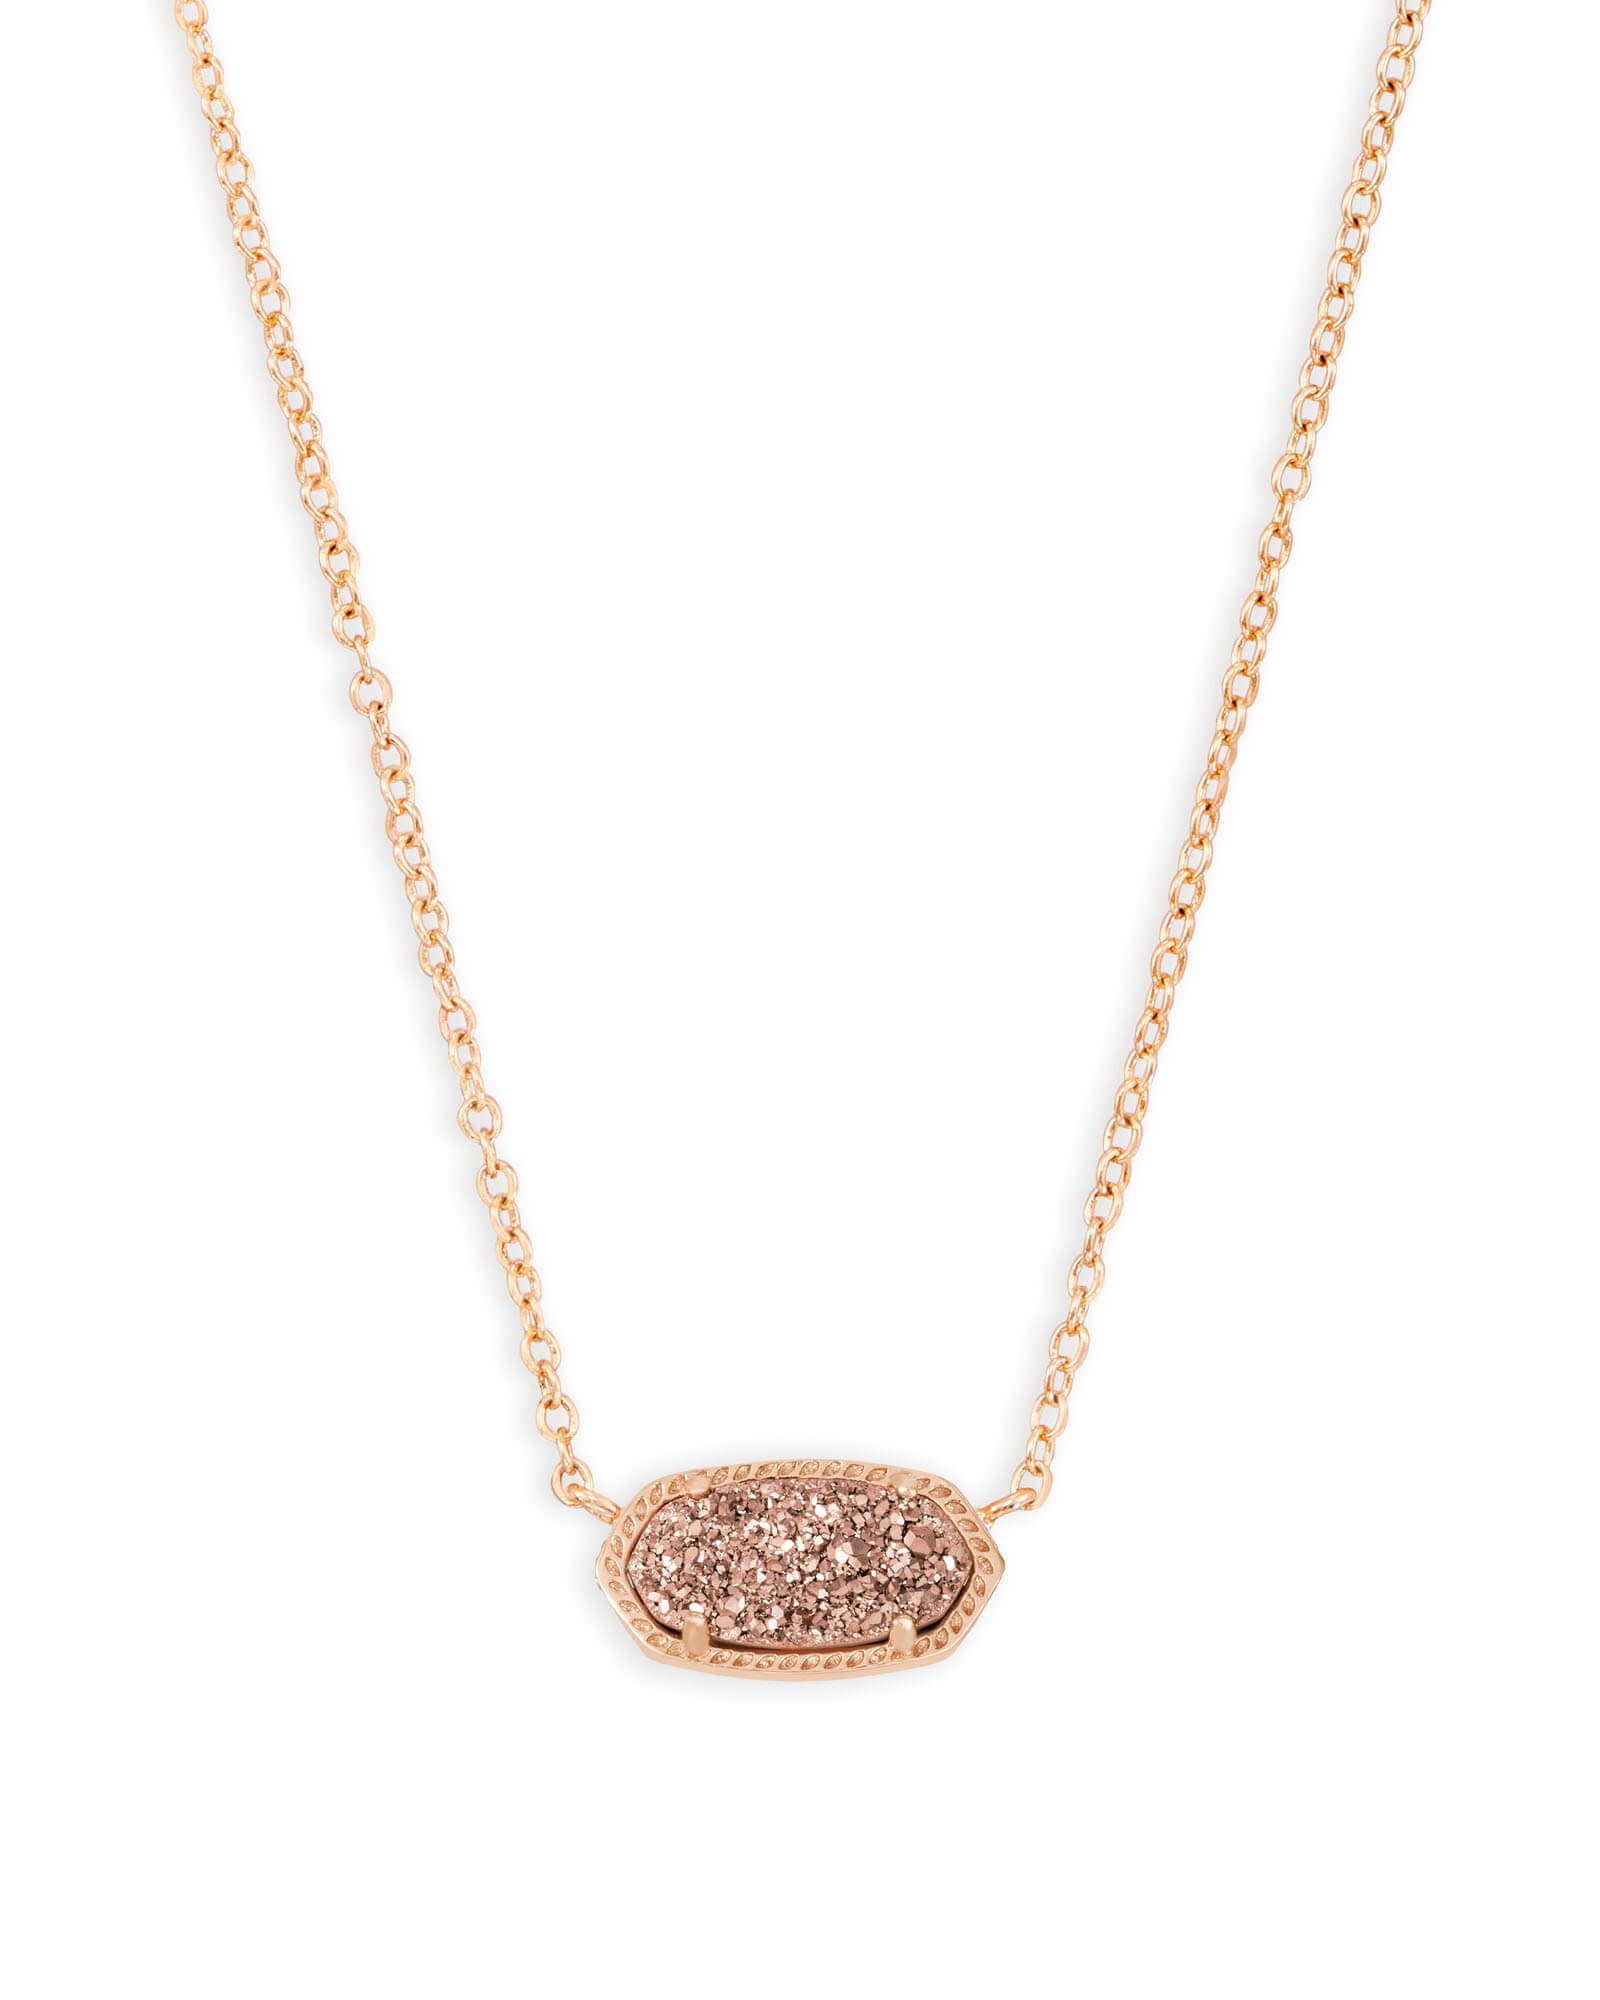 Elisa Rose Gold Pendant Necklace in Rose Drusy | Kendra Scott | Kendra Scott